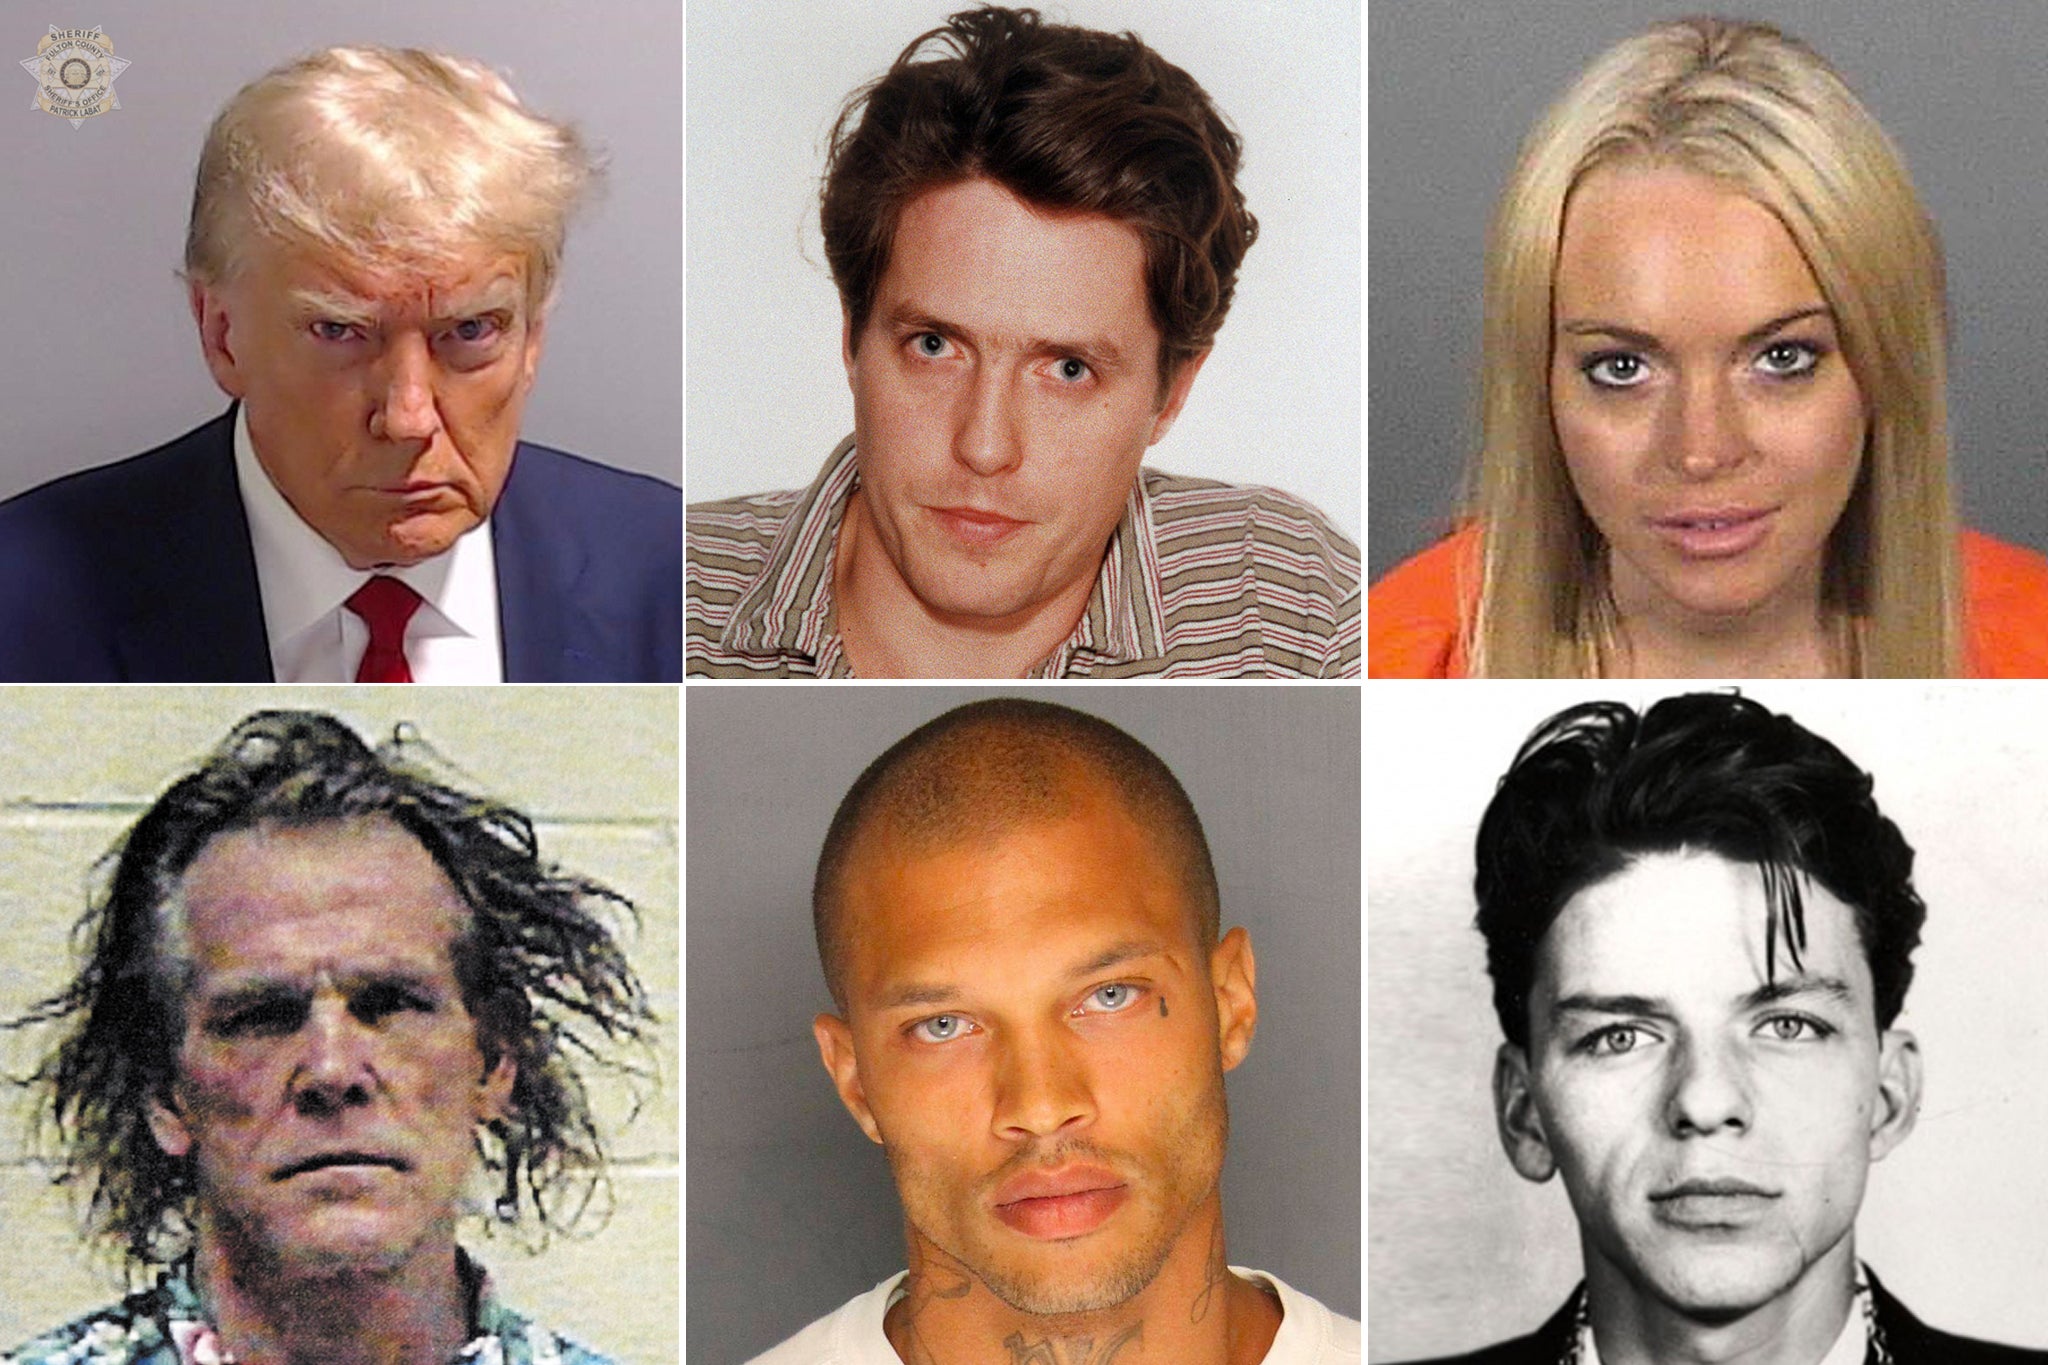 Clockwise from top left: Donald Trump, Hugh Grant, Lindsay Lohan, Frank Sinatra, Jeremy Meeks, Nick Nolte